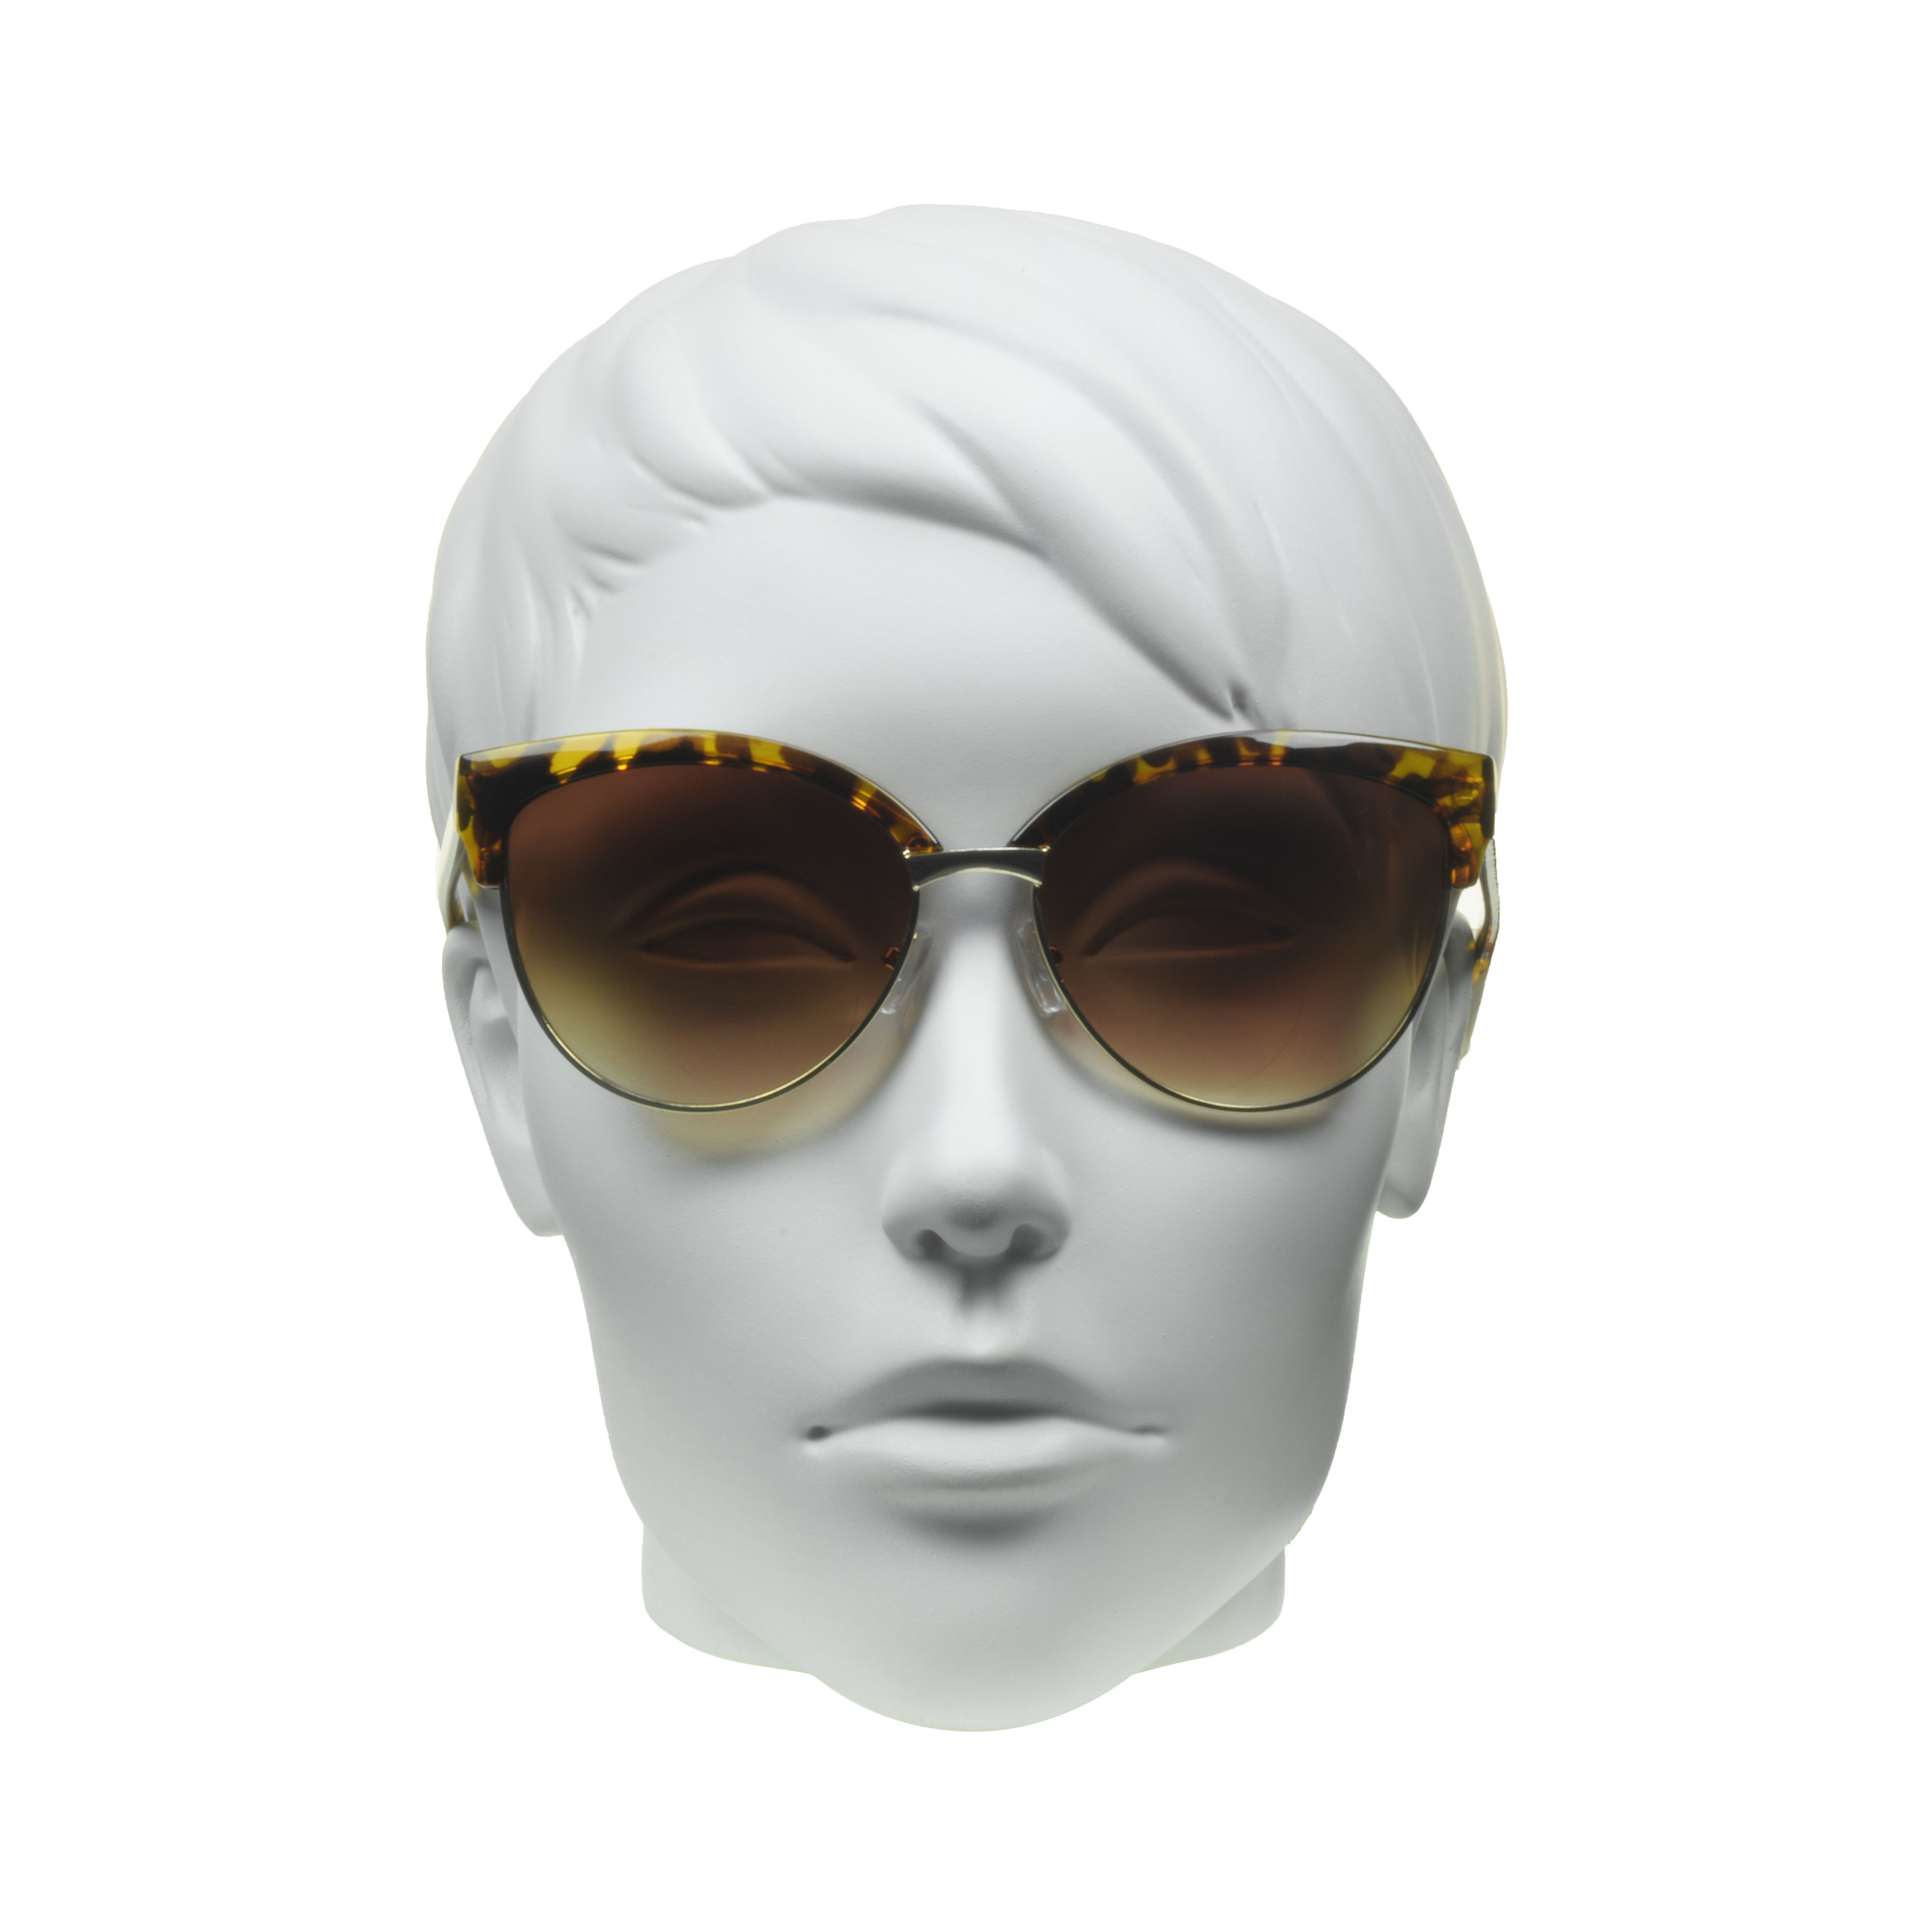 proSPORT Women Bifocal Reading Cateye Fashion Horn Rim Sunglasses Tortoise Gold Frame Brown Lens +3.00 - image 3 of 5